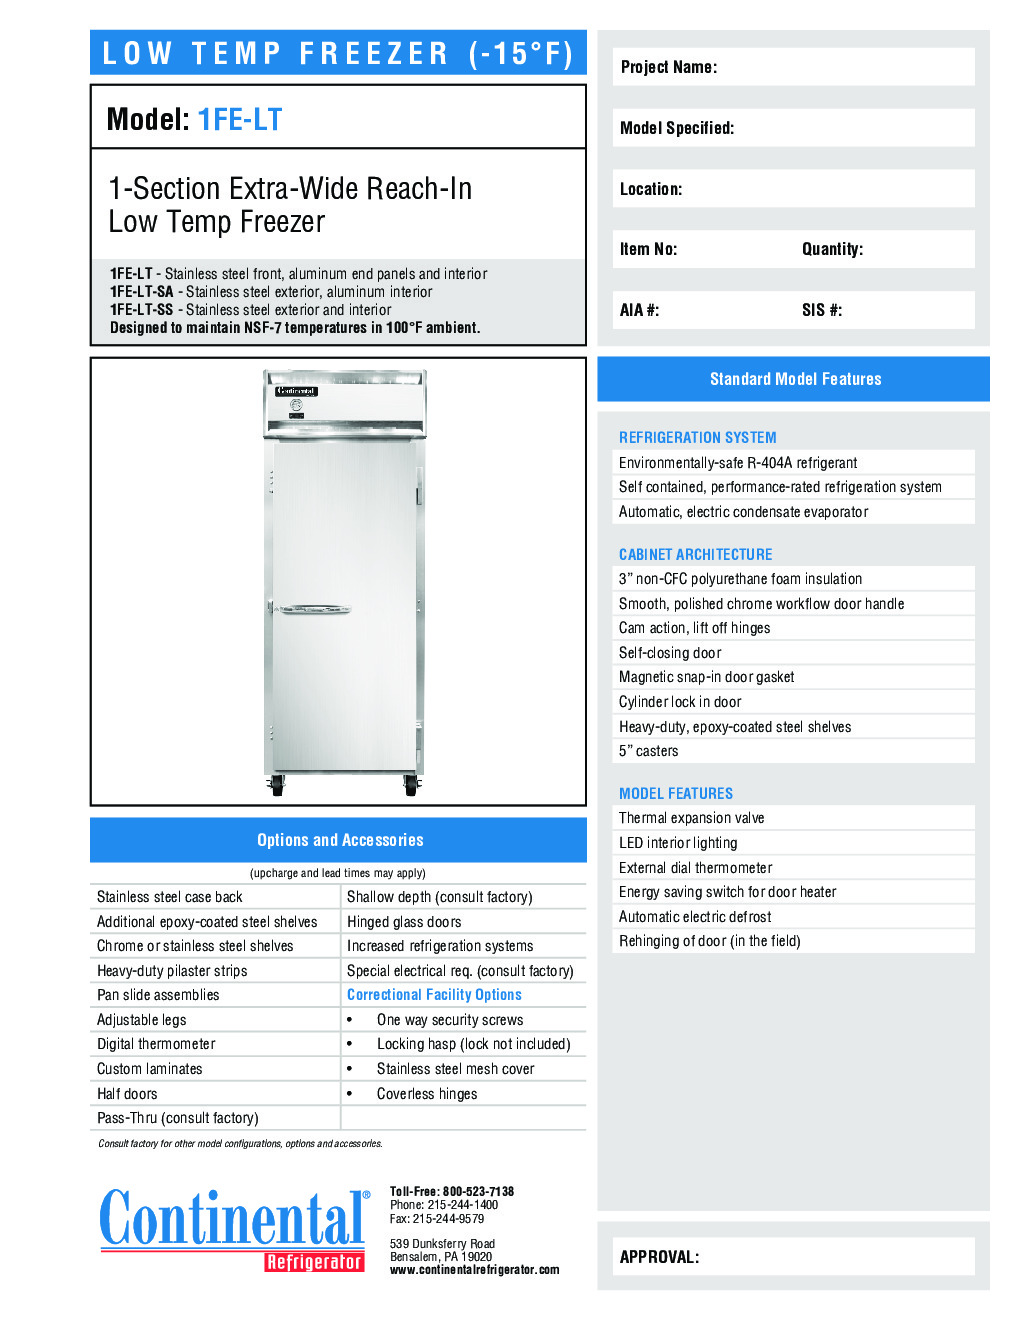 Continental Refrigerator 1FE-LT Reach-In Low Temperature Freezer